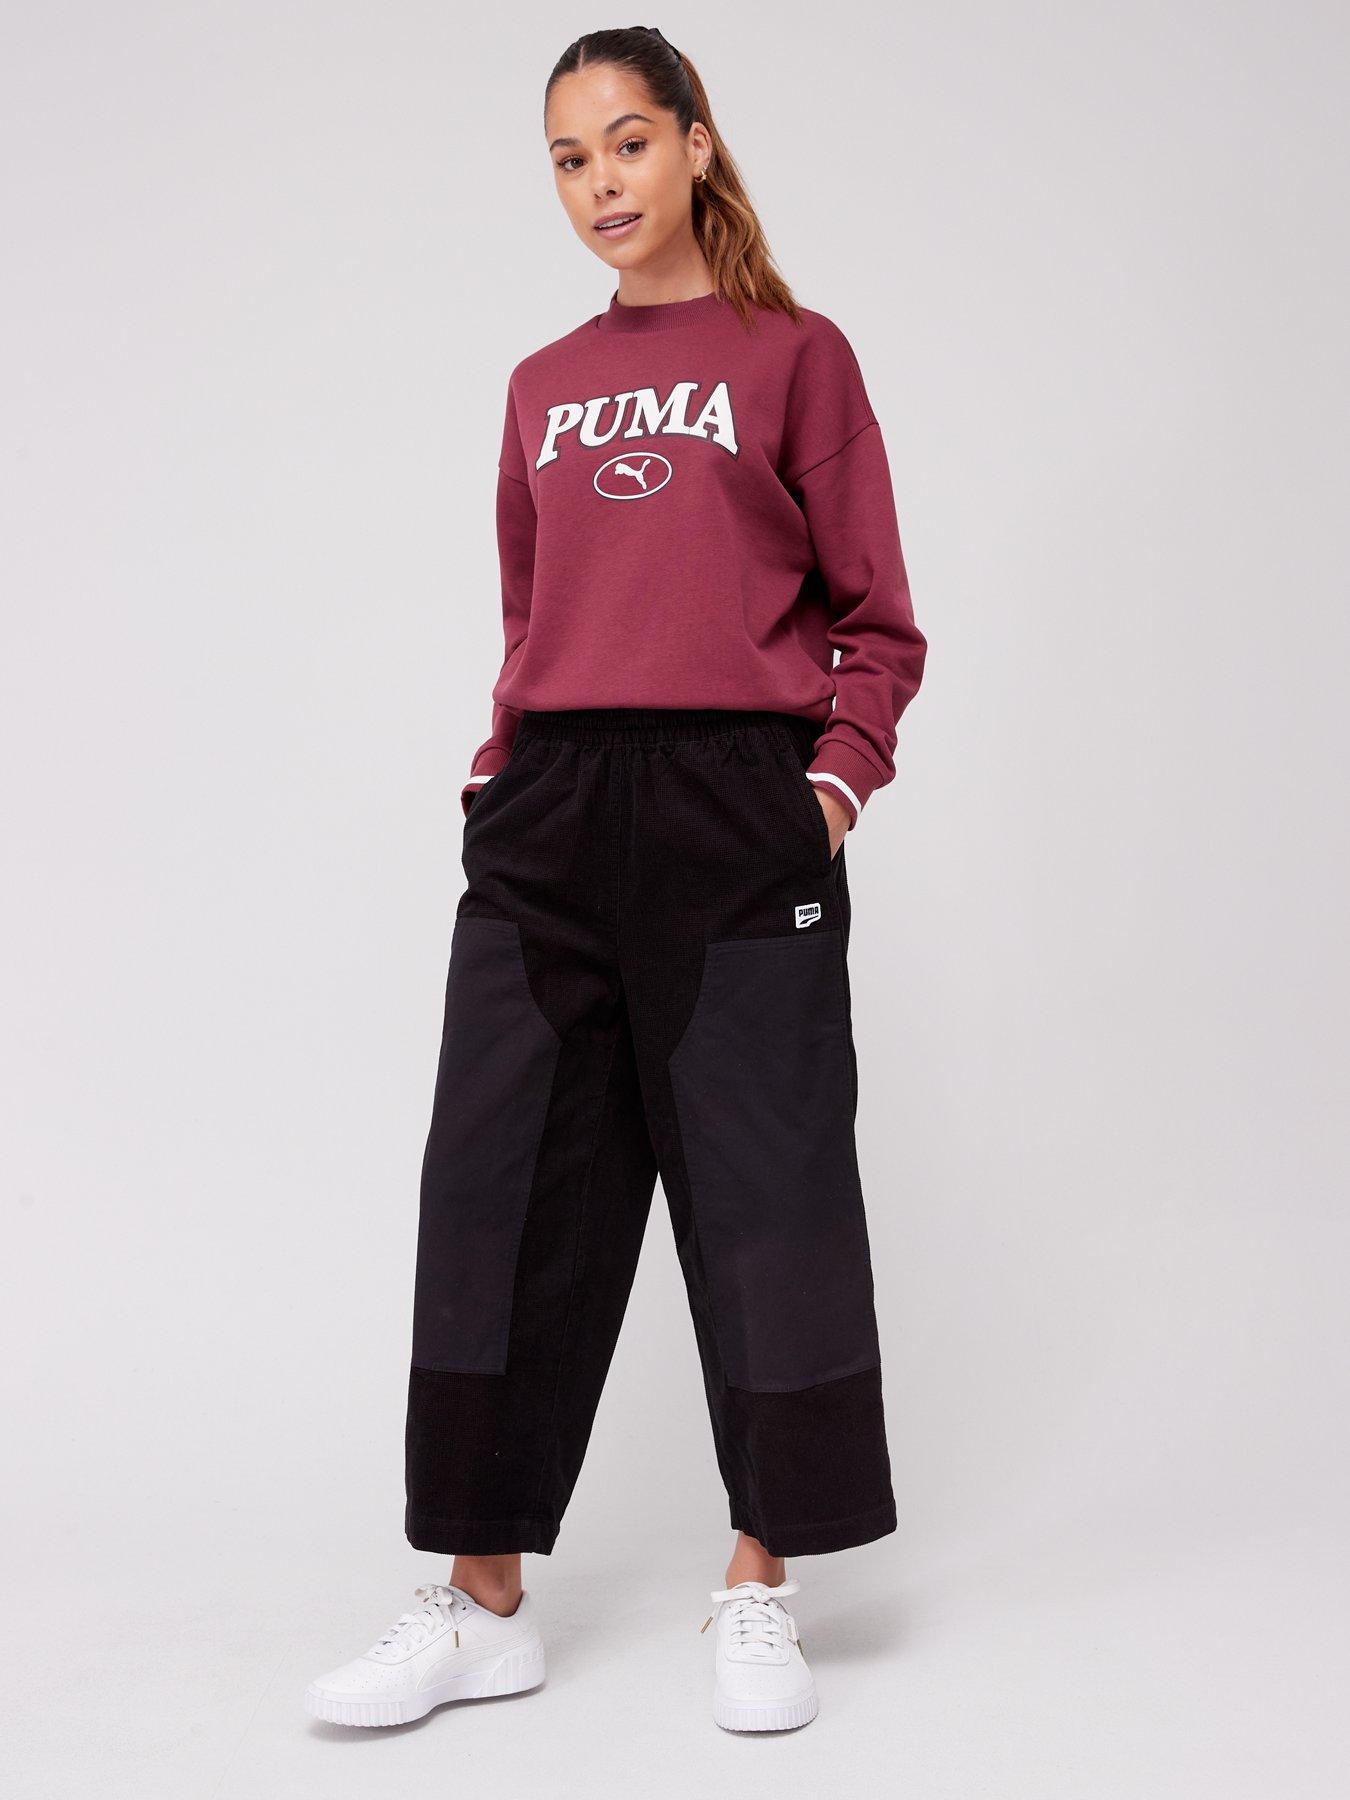 PUMA Neon Pink Logo Patch Zip-Up Jacket & Black Leggings, Knockout